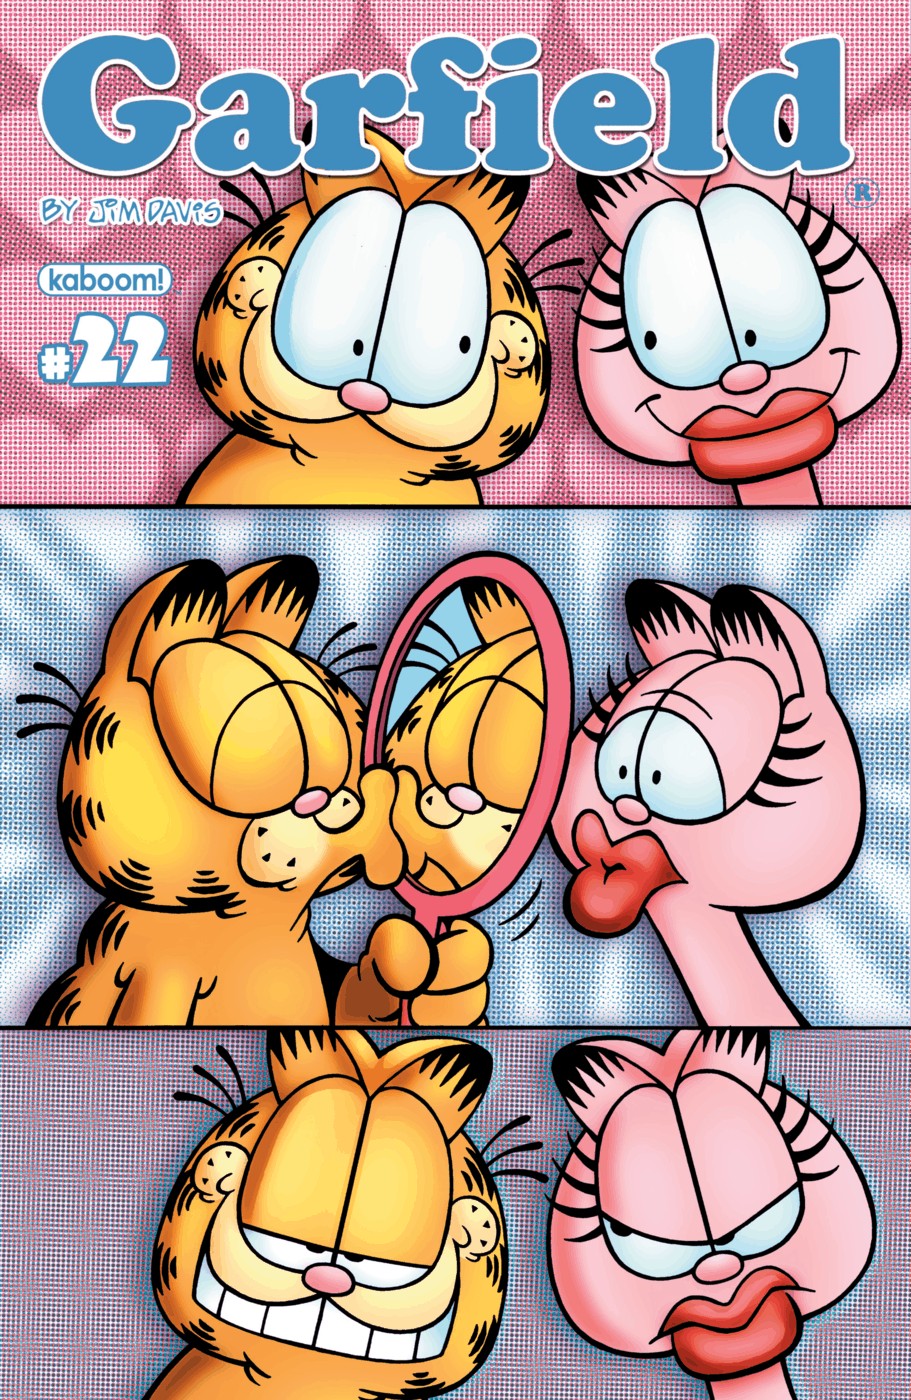 Garfield 022 2014 | Read Garfield 022 2014 comic online in high quality.  Read Full Comic online for free - Read comics online in high quality  .|viewcomiconline.com